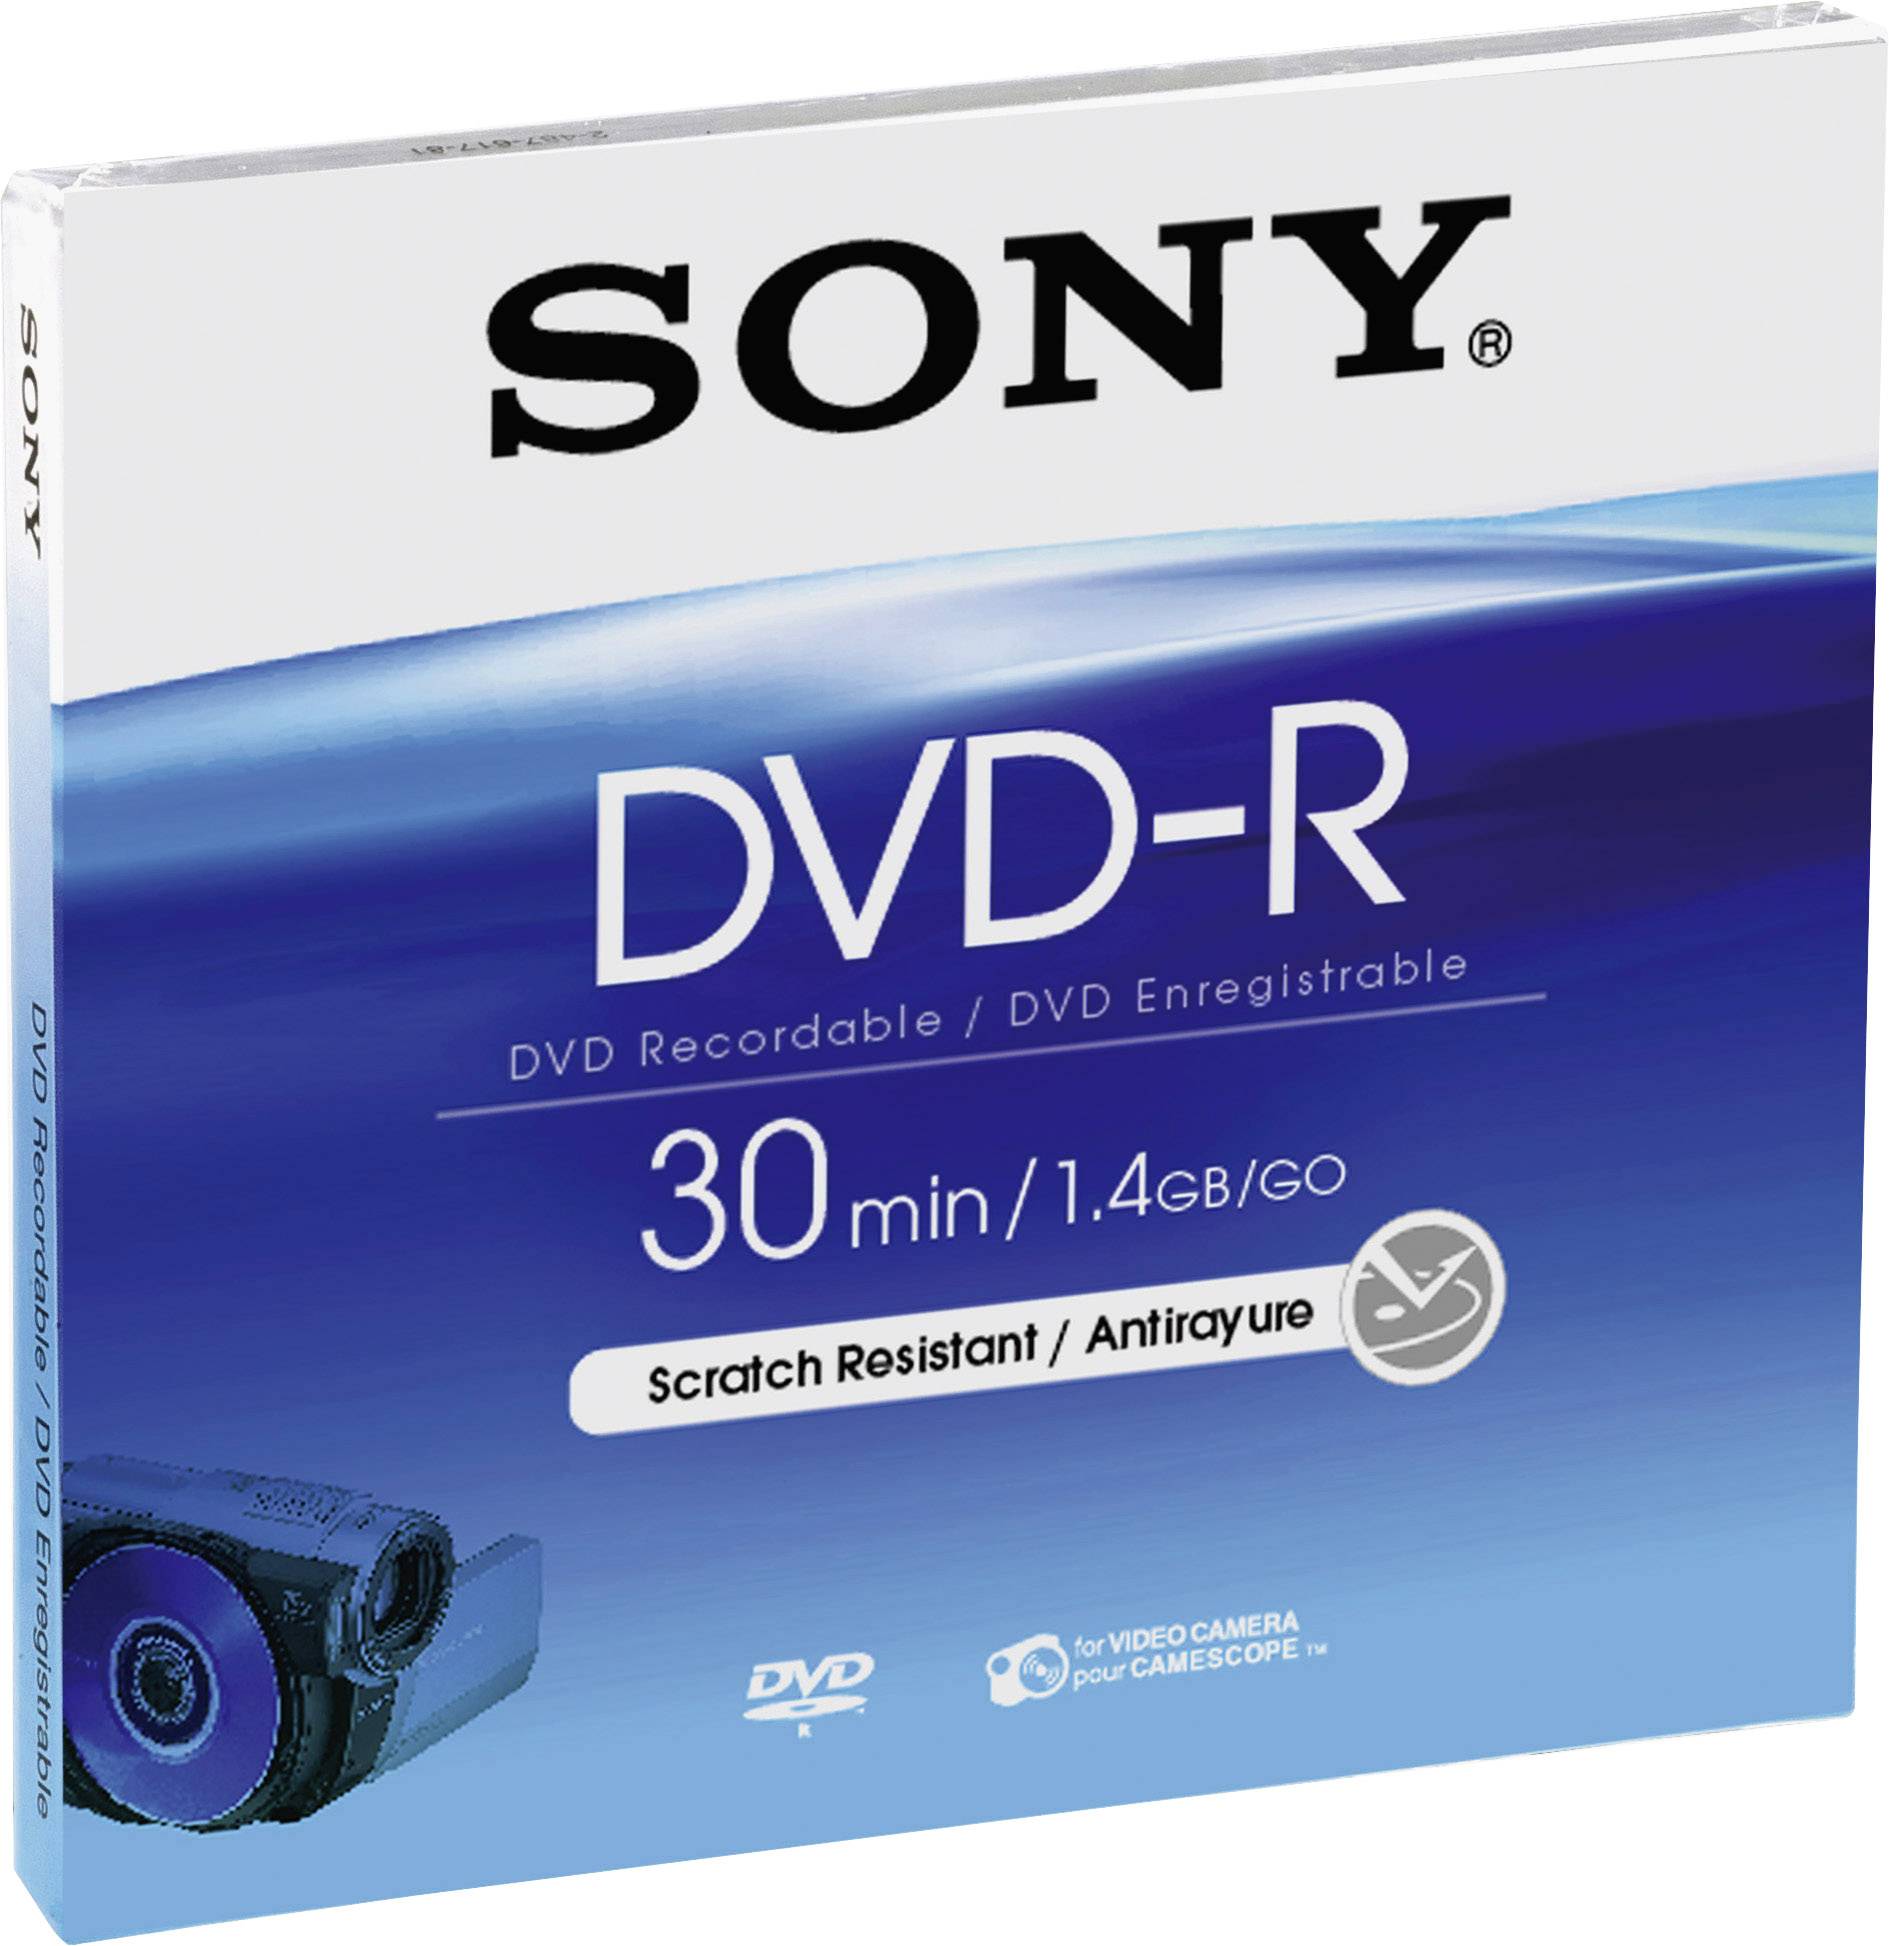 Refrein spanning koper Sony DMR30A 8 cm mini DVD-R disc 1.46 GB 5 stuk(s) Jewelcase | Conrad.be